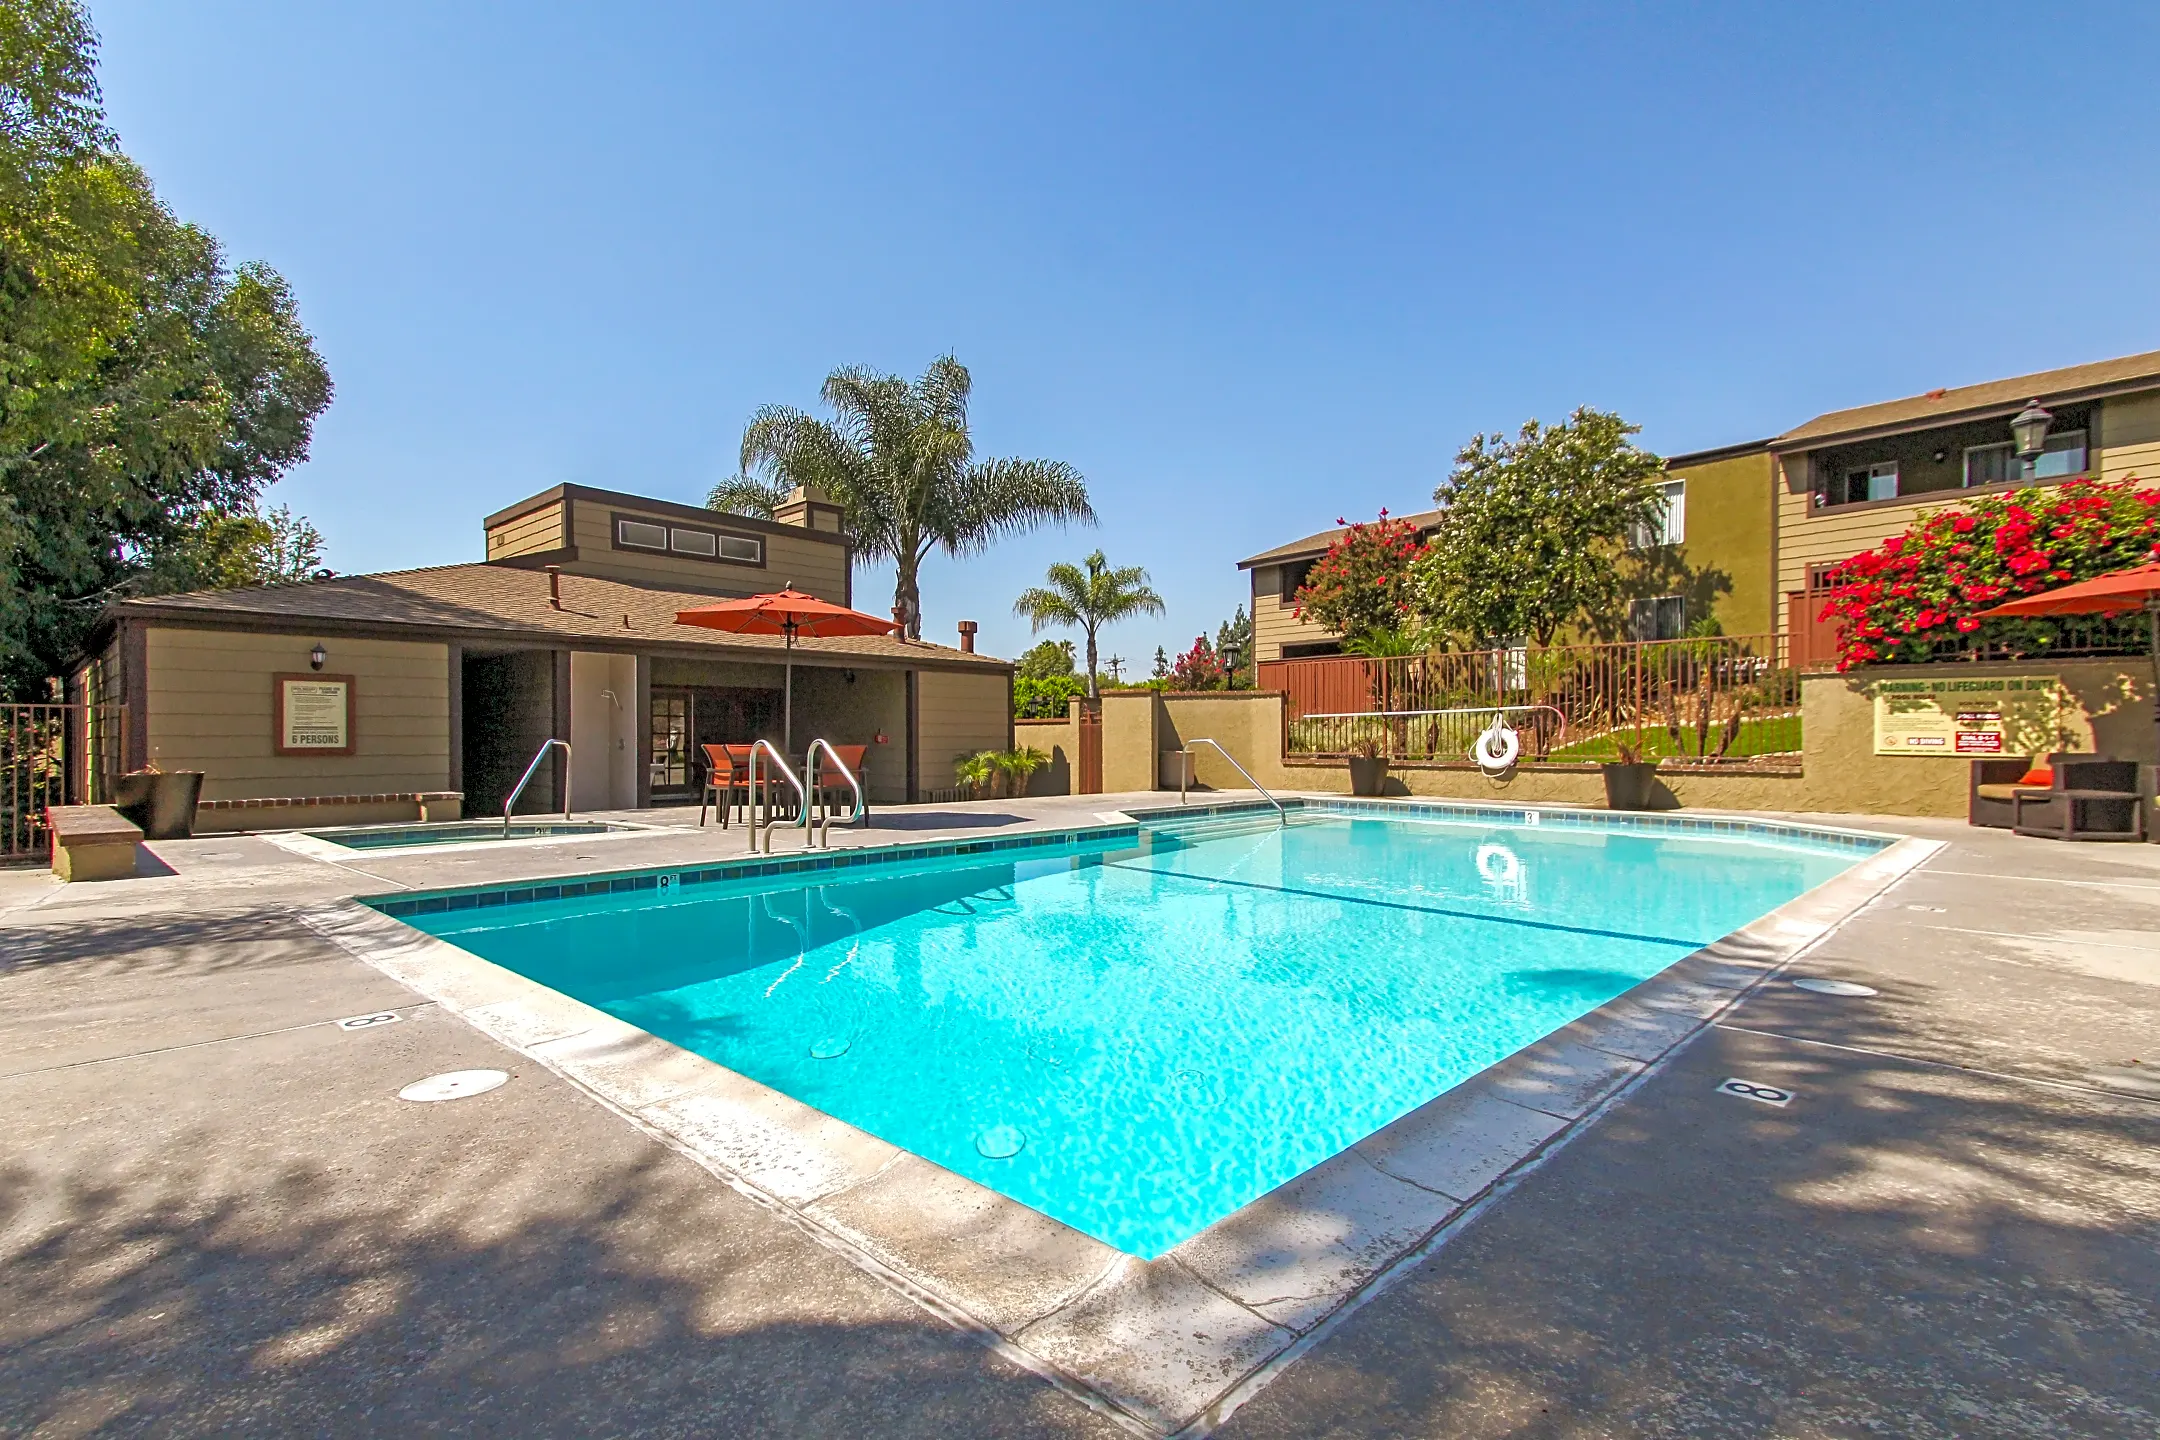 Pool - Don Miguel - Rancho Cucamonga, CA